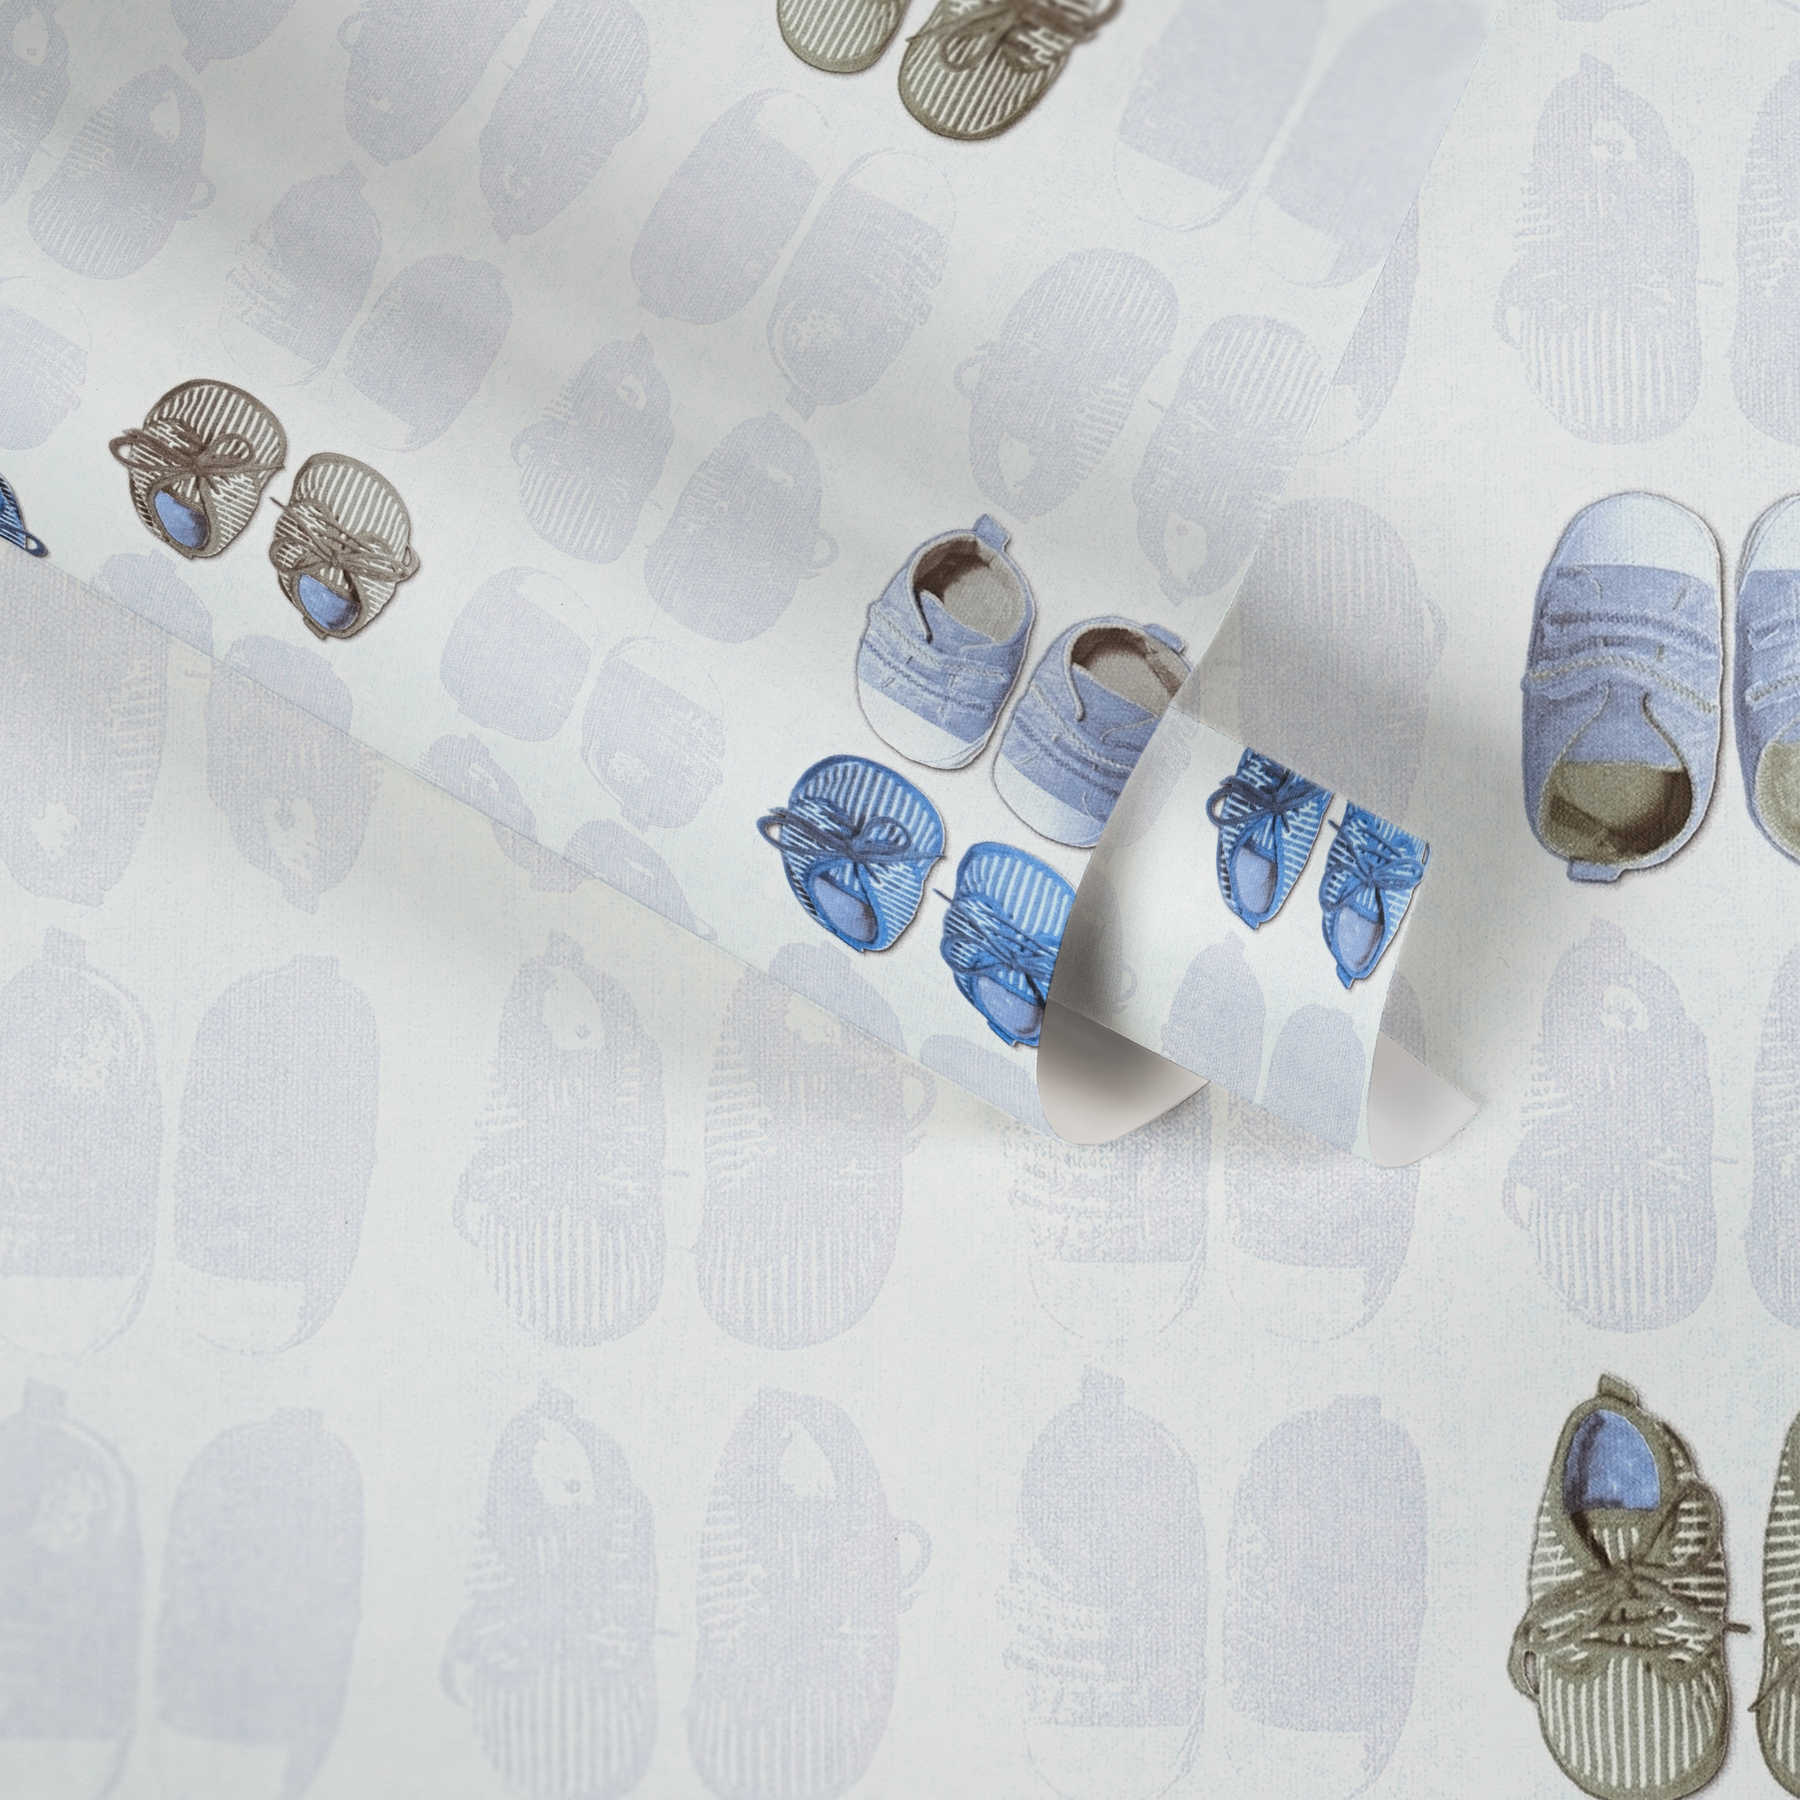             Chambre de bébé Papier peint Chaussons de bébé garçon - Bleu, blanc
        